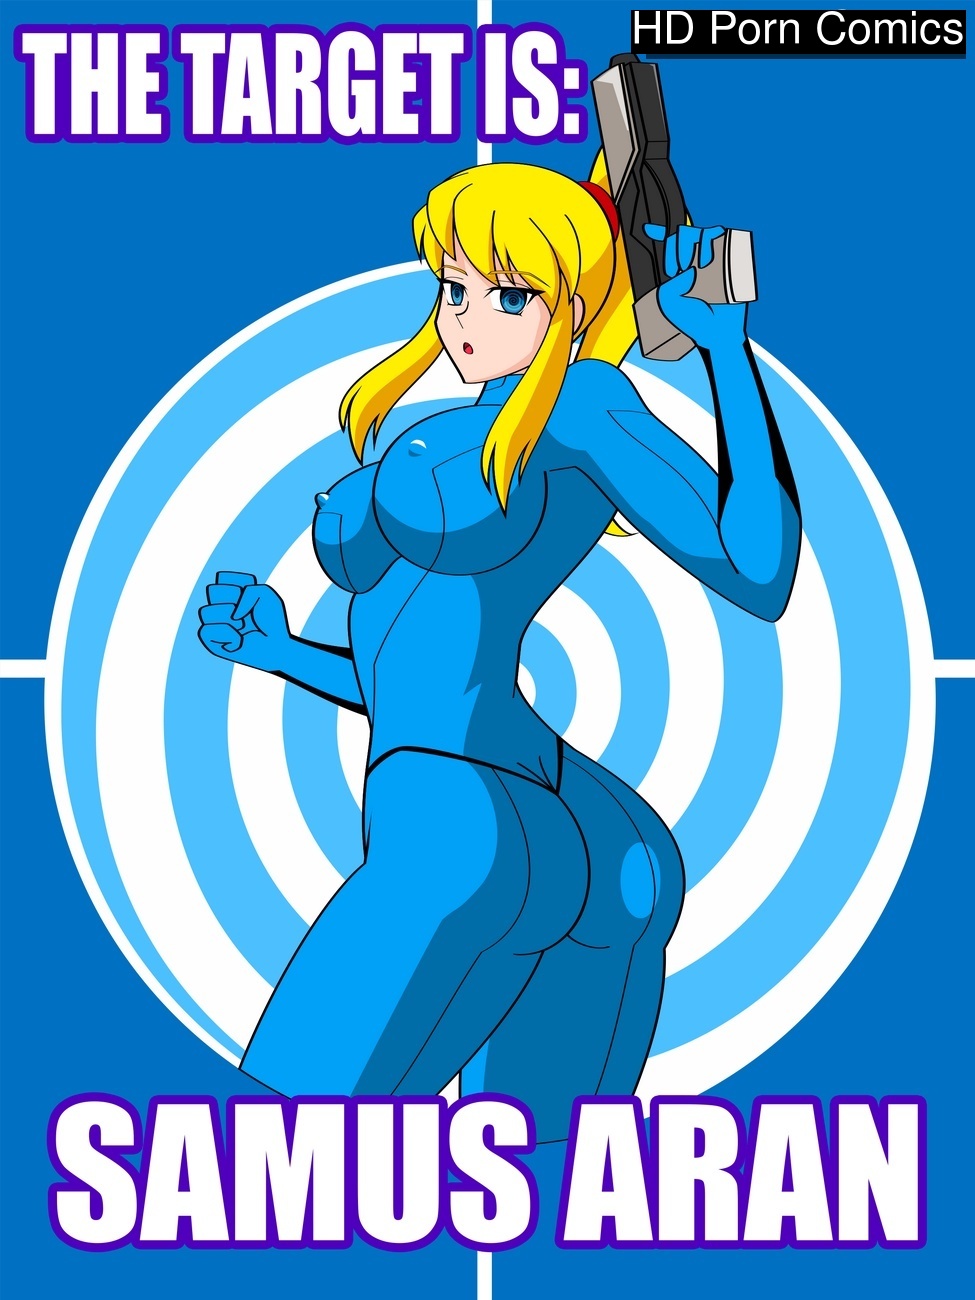 Samus Aran Hypnotized - The Target Is Samus Aran Sex Comic - HD Porn Comics